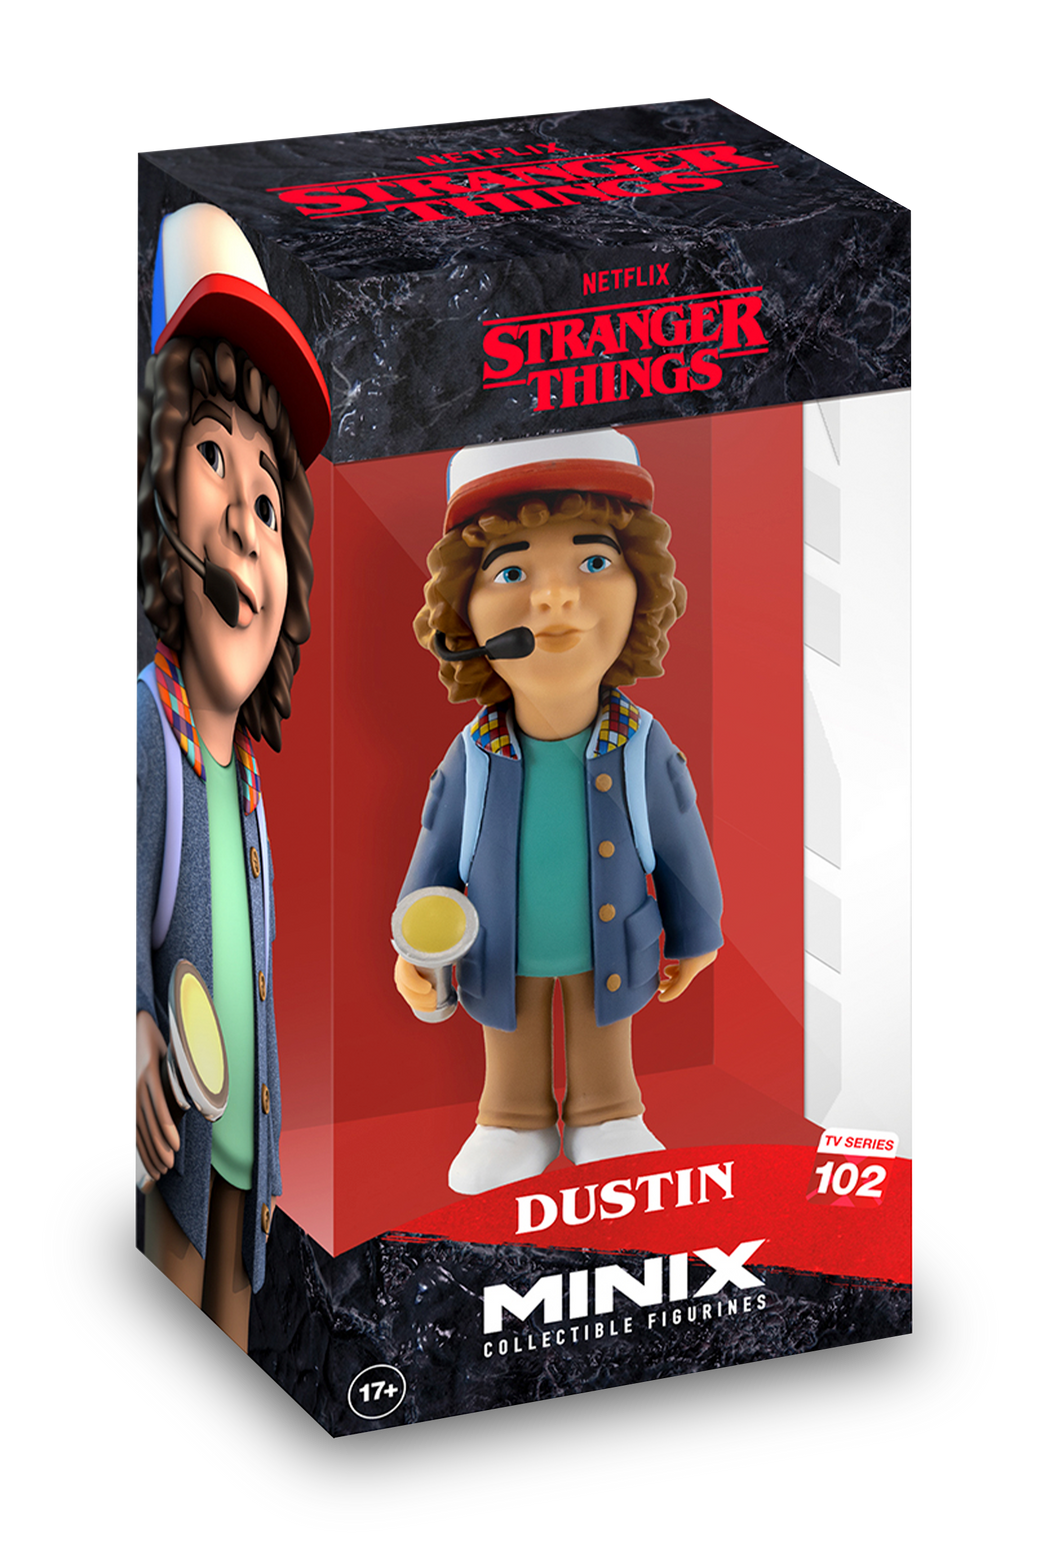 Minix 收藏人偶12cm 名人擺件模型 - Stranger Things怪奇物語 - Dustin 達斯汀